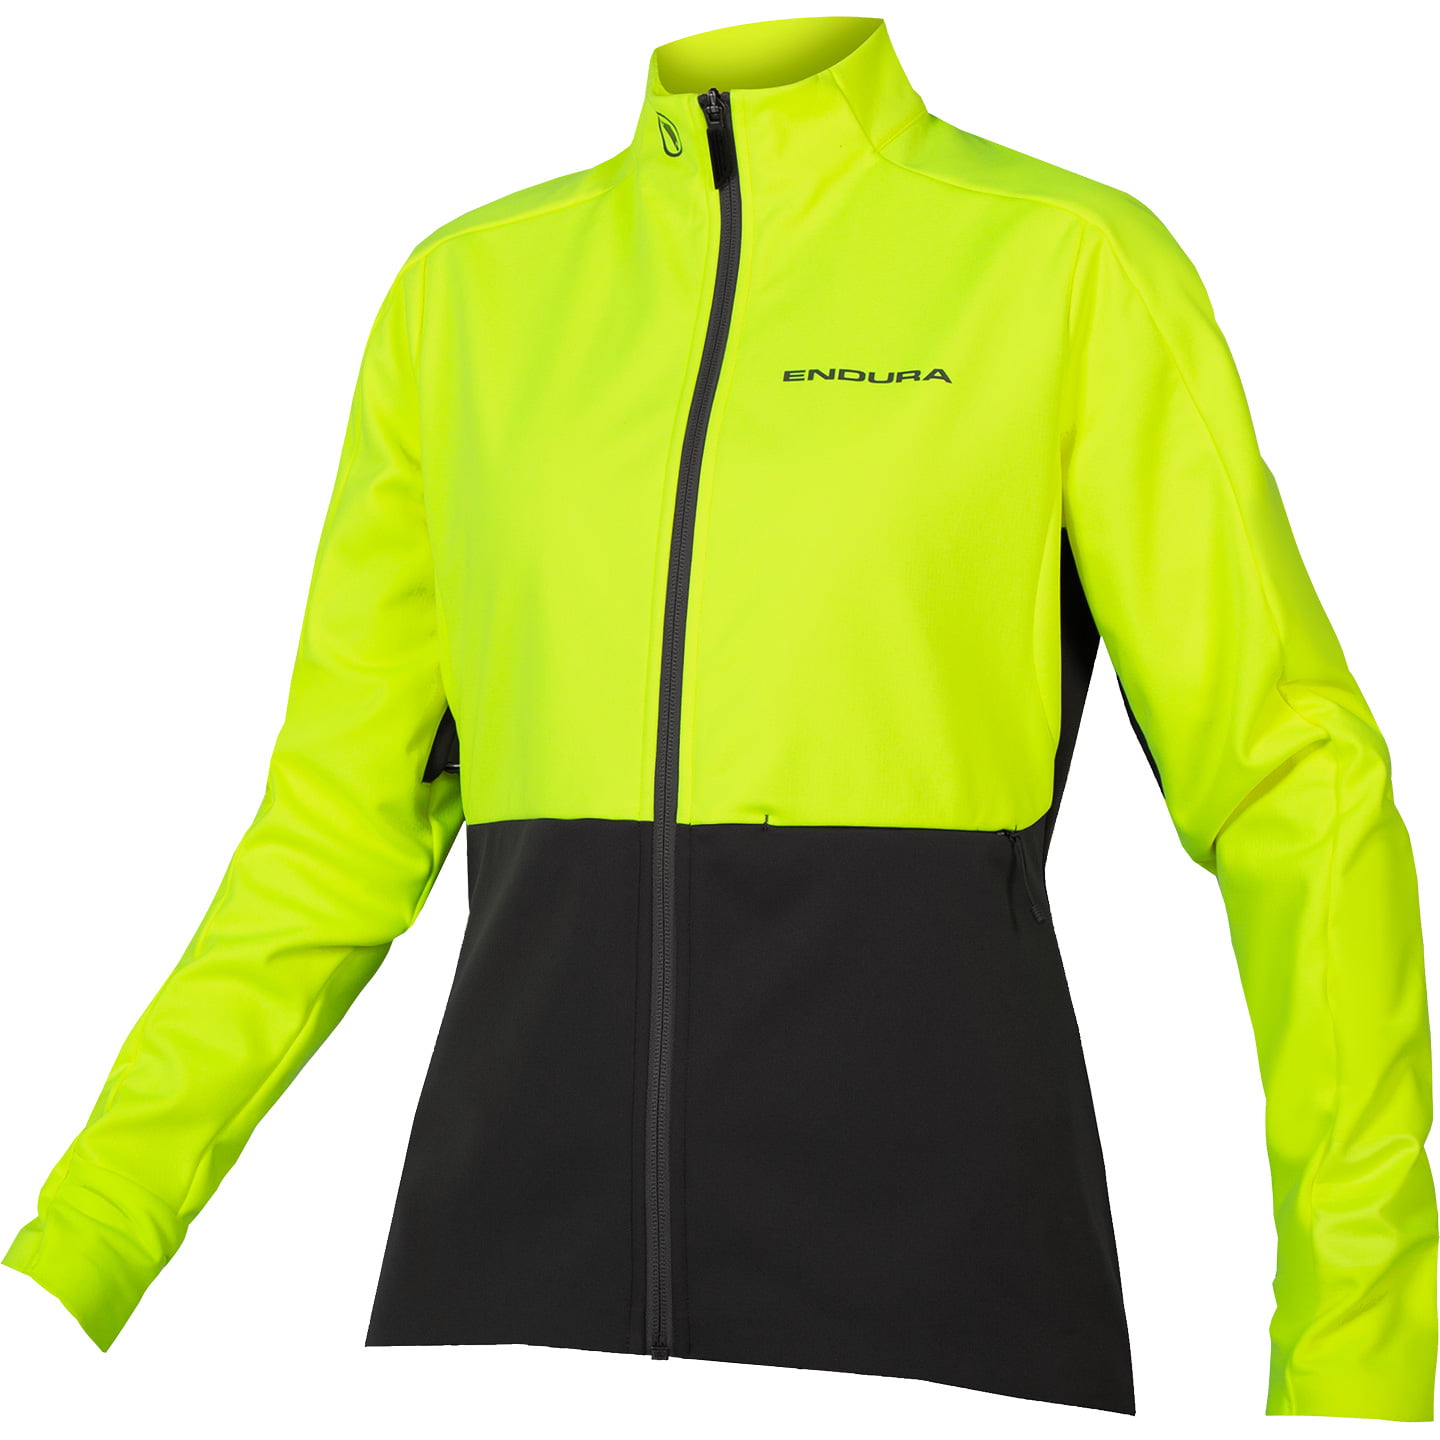 ENDURA Windchill Women’s Winter Jacket Women’s Thermal Jacket, size L, Winter jacket, Cycling clothing